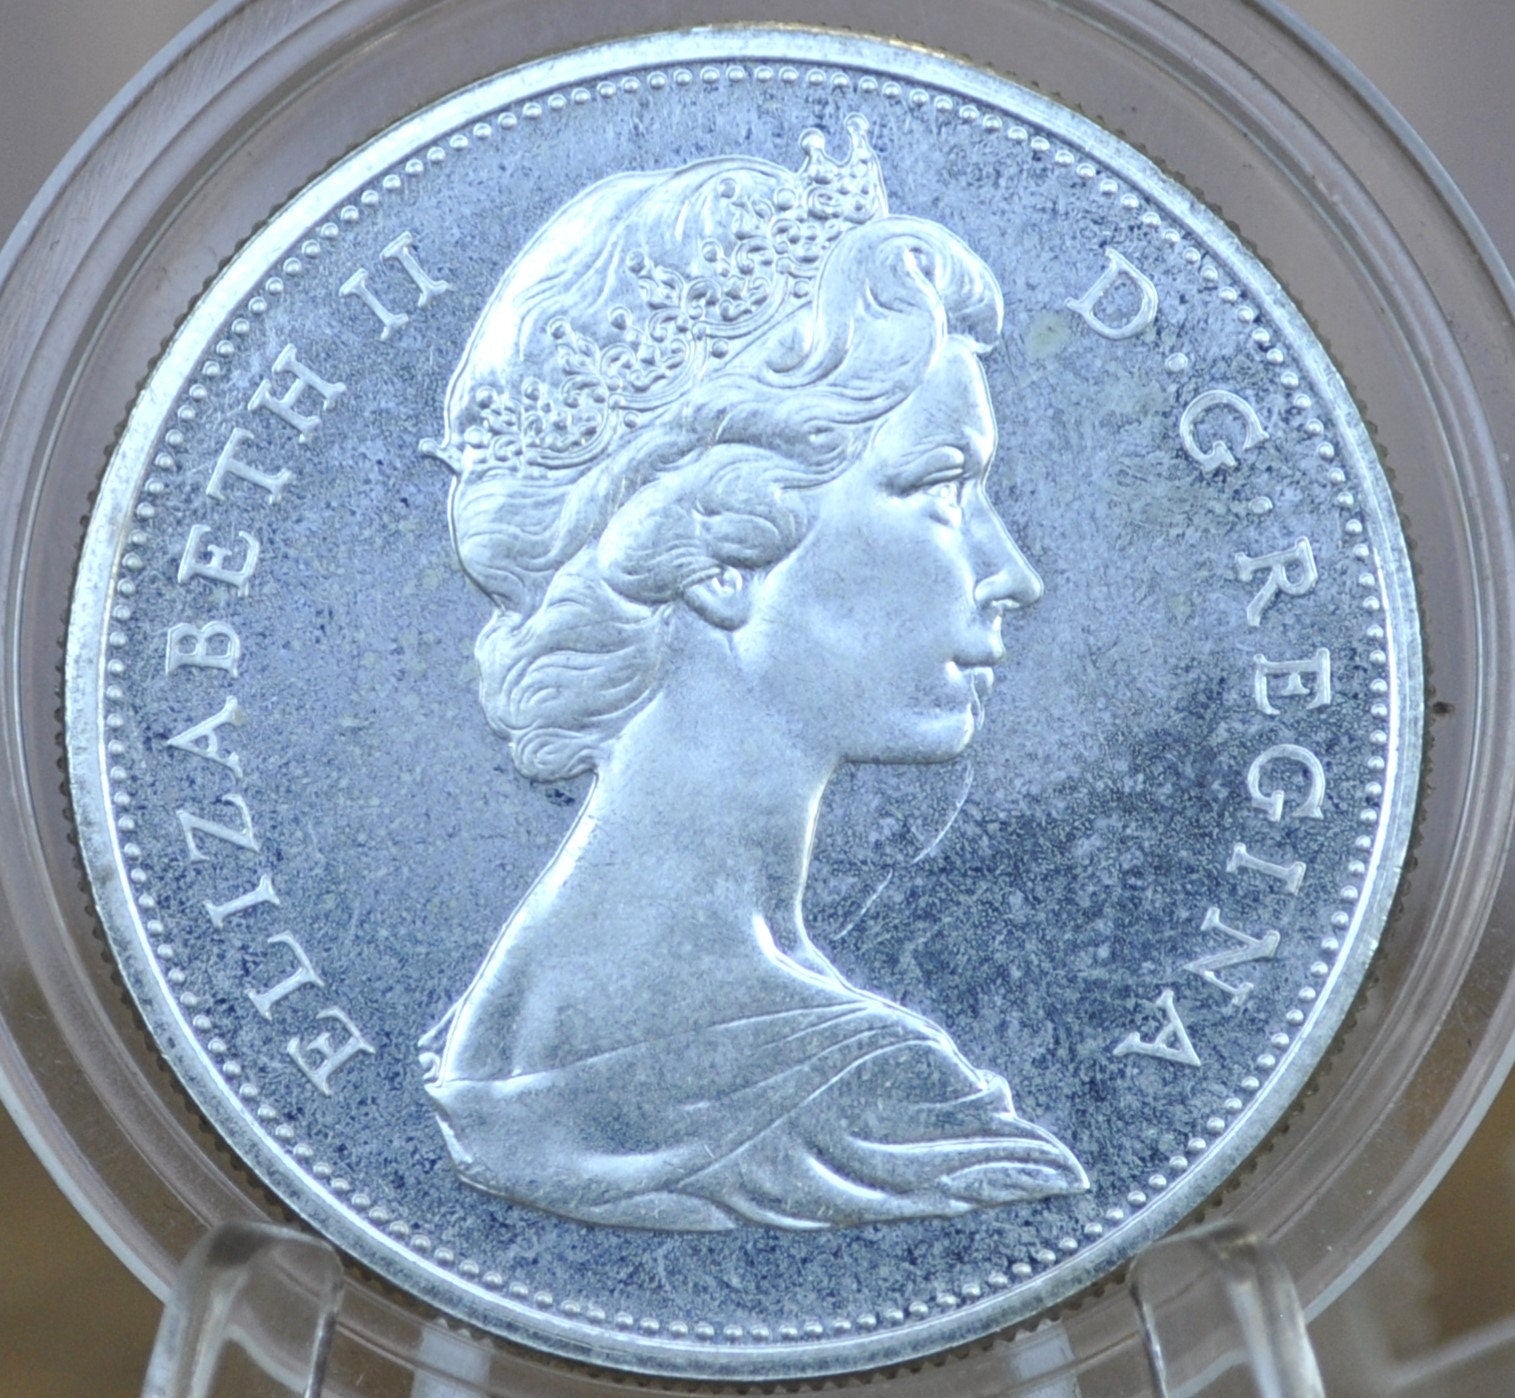 1965 Canadian Silver Dollar - Canoe Silver Dollar - 80% Silver - Silver Dollar Canada 1965 - Canadian Coin Collection